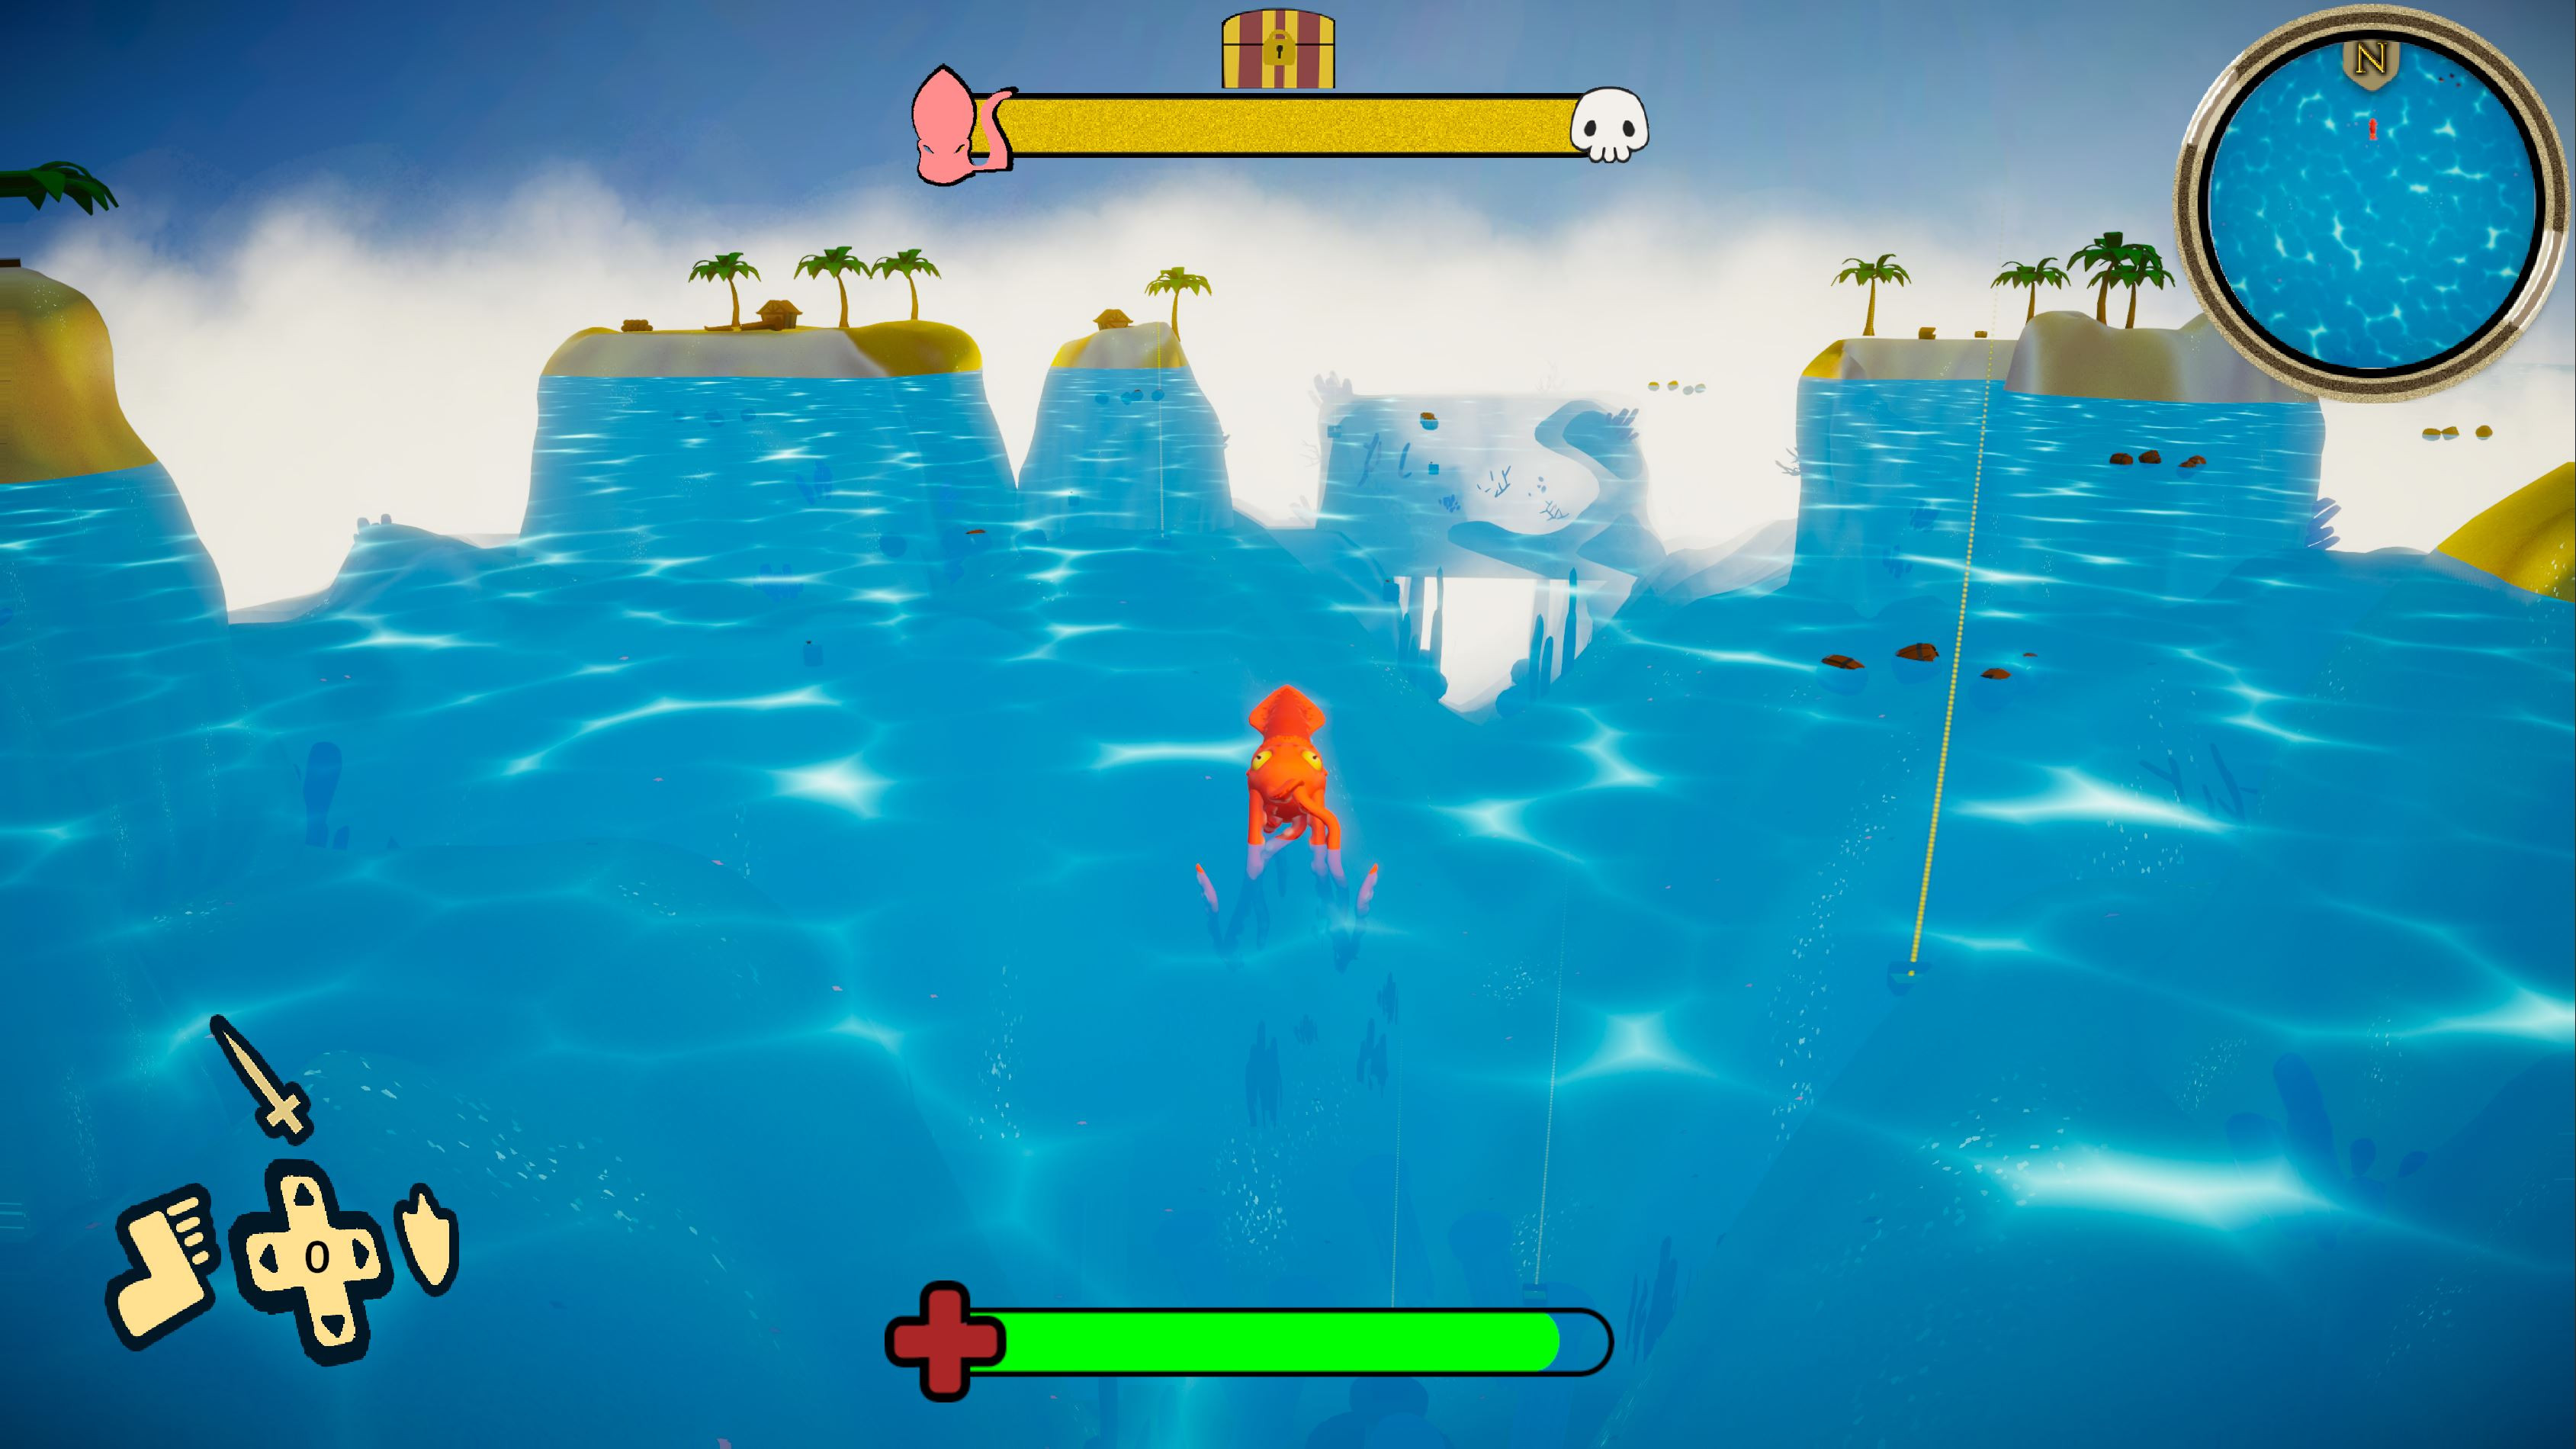 students' gameplay screenshot